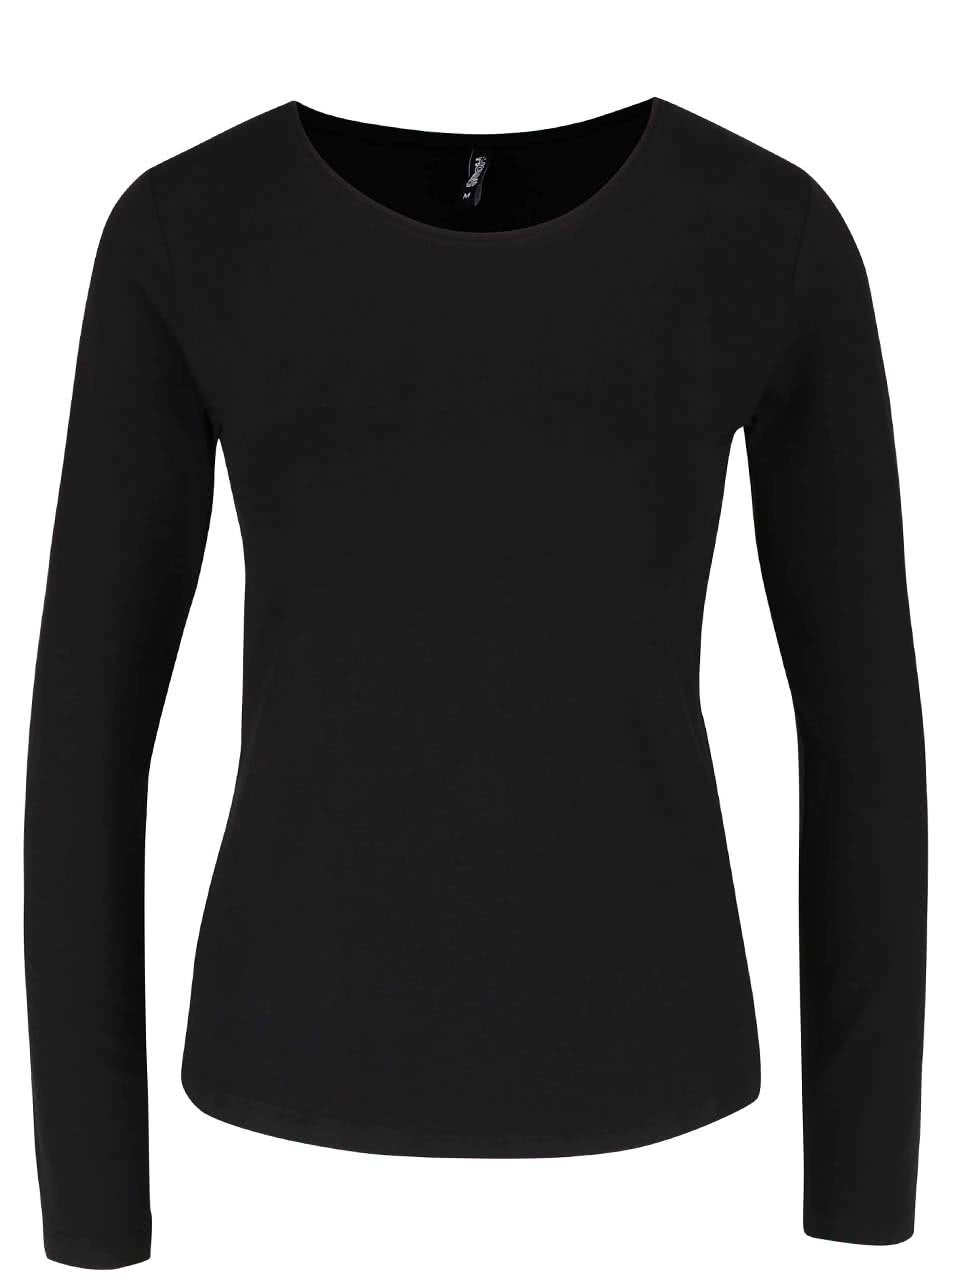 Černé tričko s dlouhým rukávem Haily´s Tina